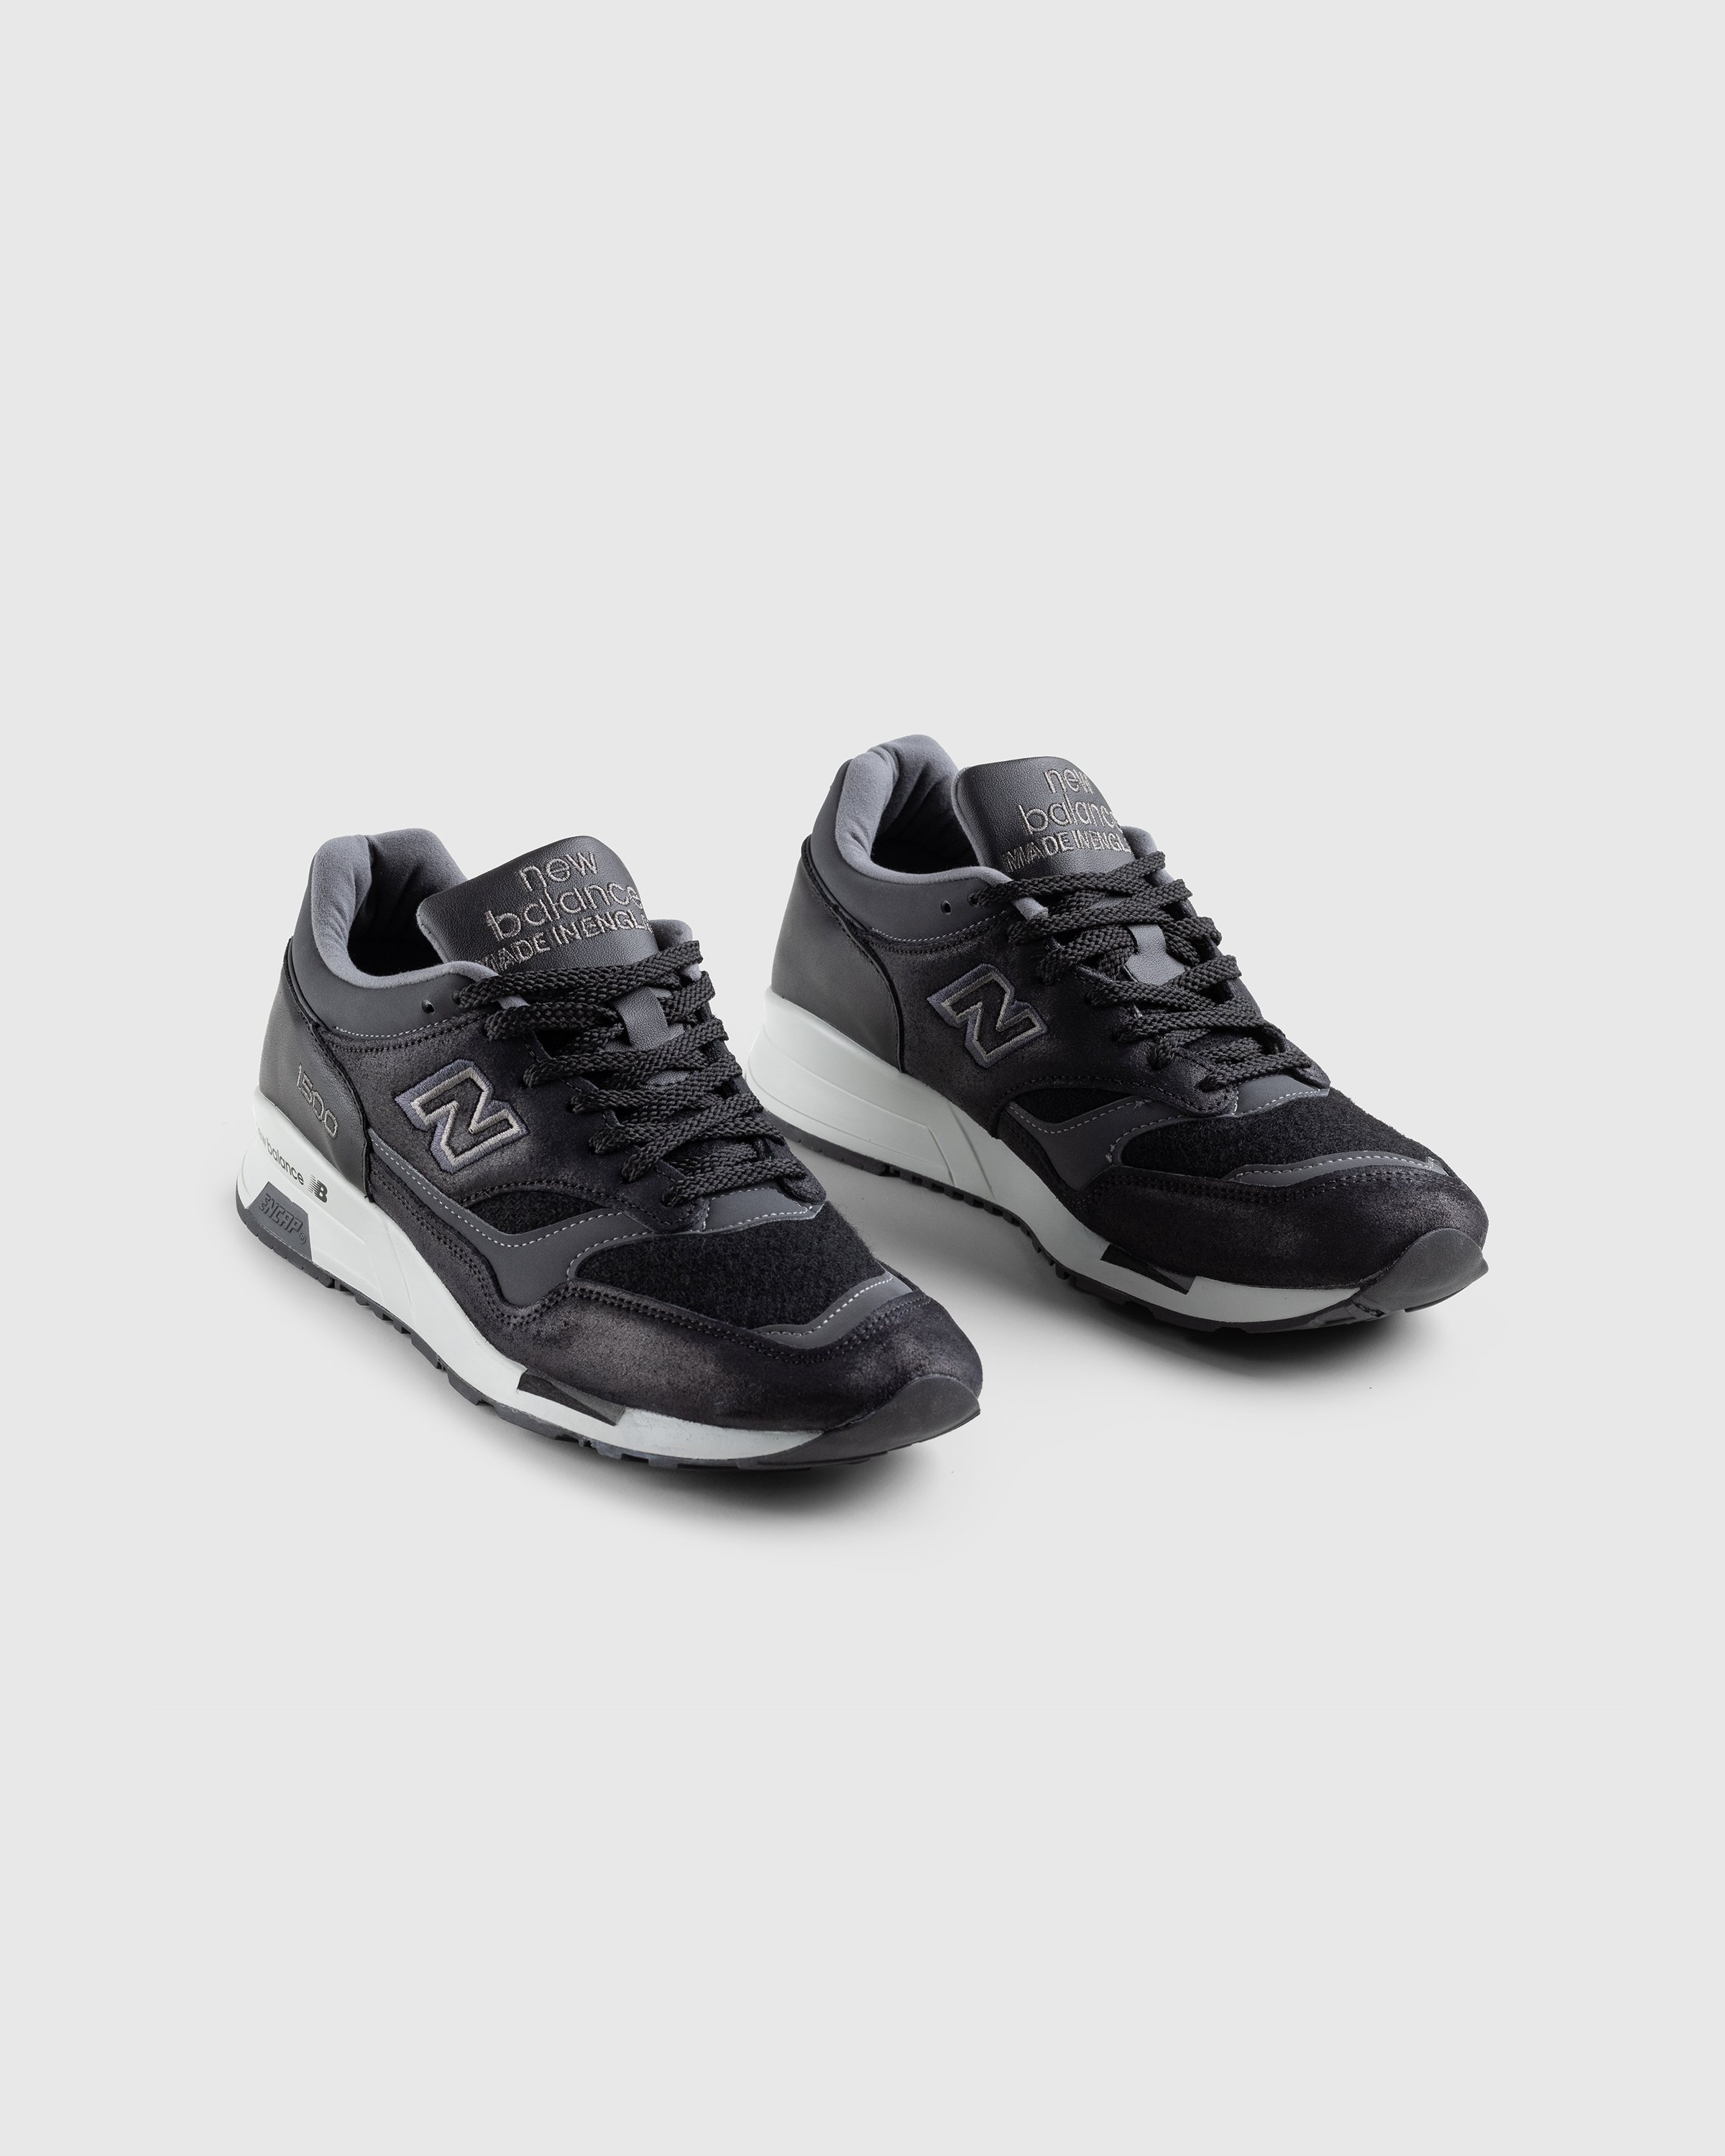 New Balance - M1500DJ Black/Grey - Footwear - Black - Image 3